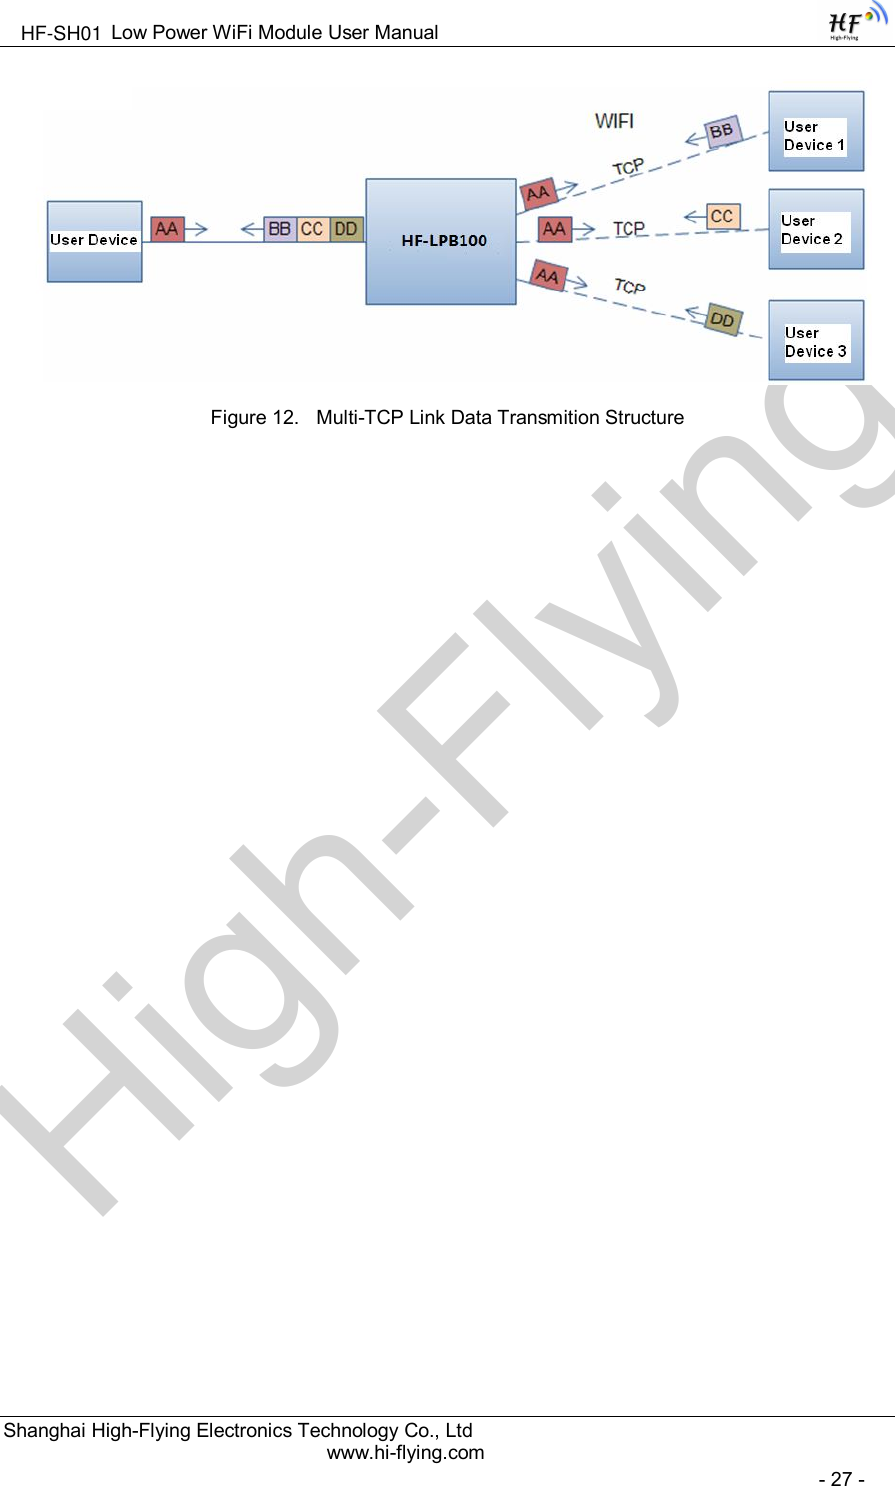 High-FlyingLow Power WiFi Module User ManualShanghai High-Flying Electronics Technology Co., Ltdwww.hi-flying.com- 27 -Figure 12. Multi-TCP Link Data Transmition StructureHF-SH01